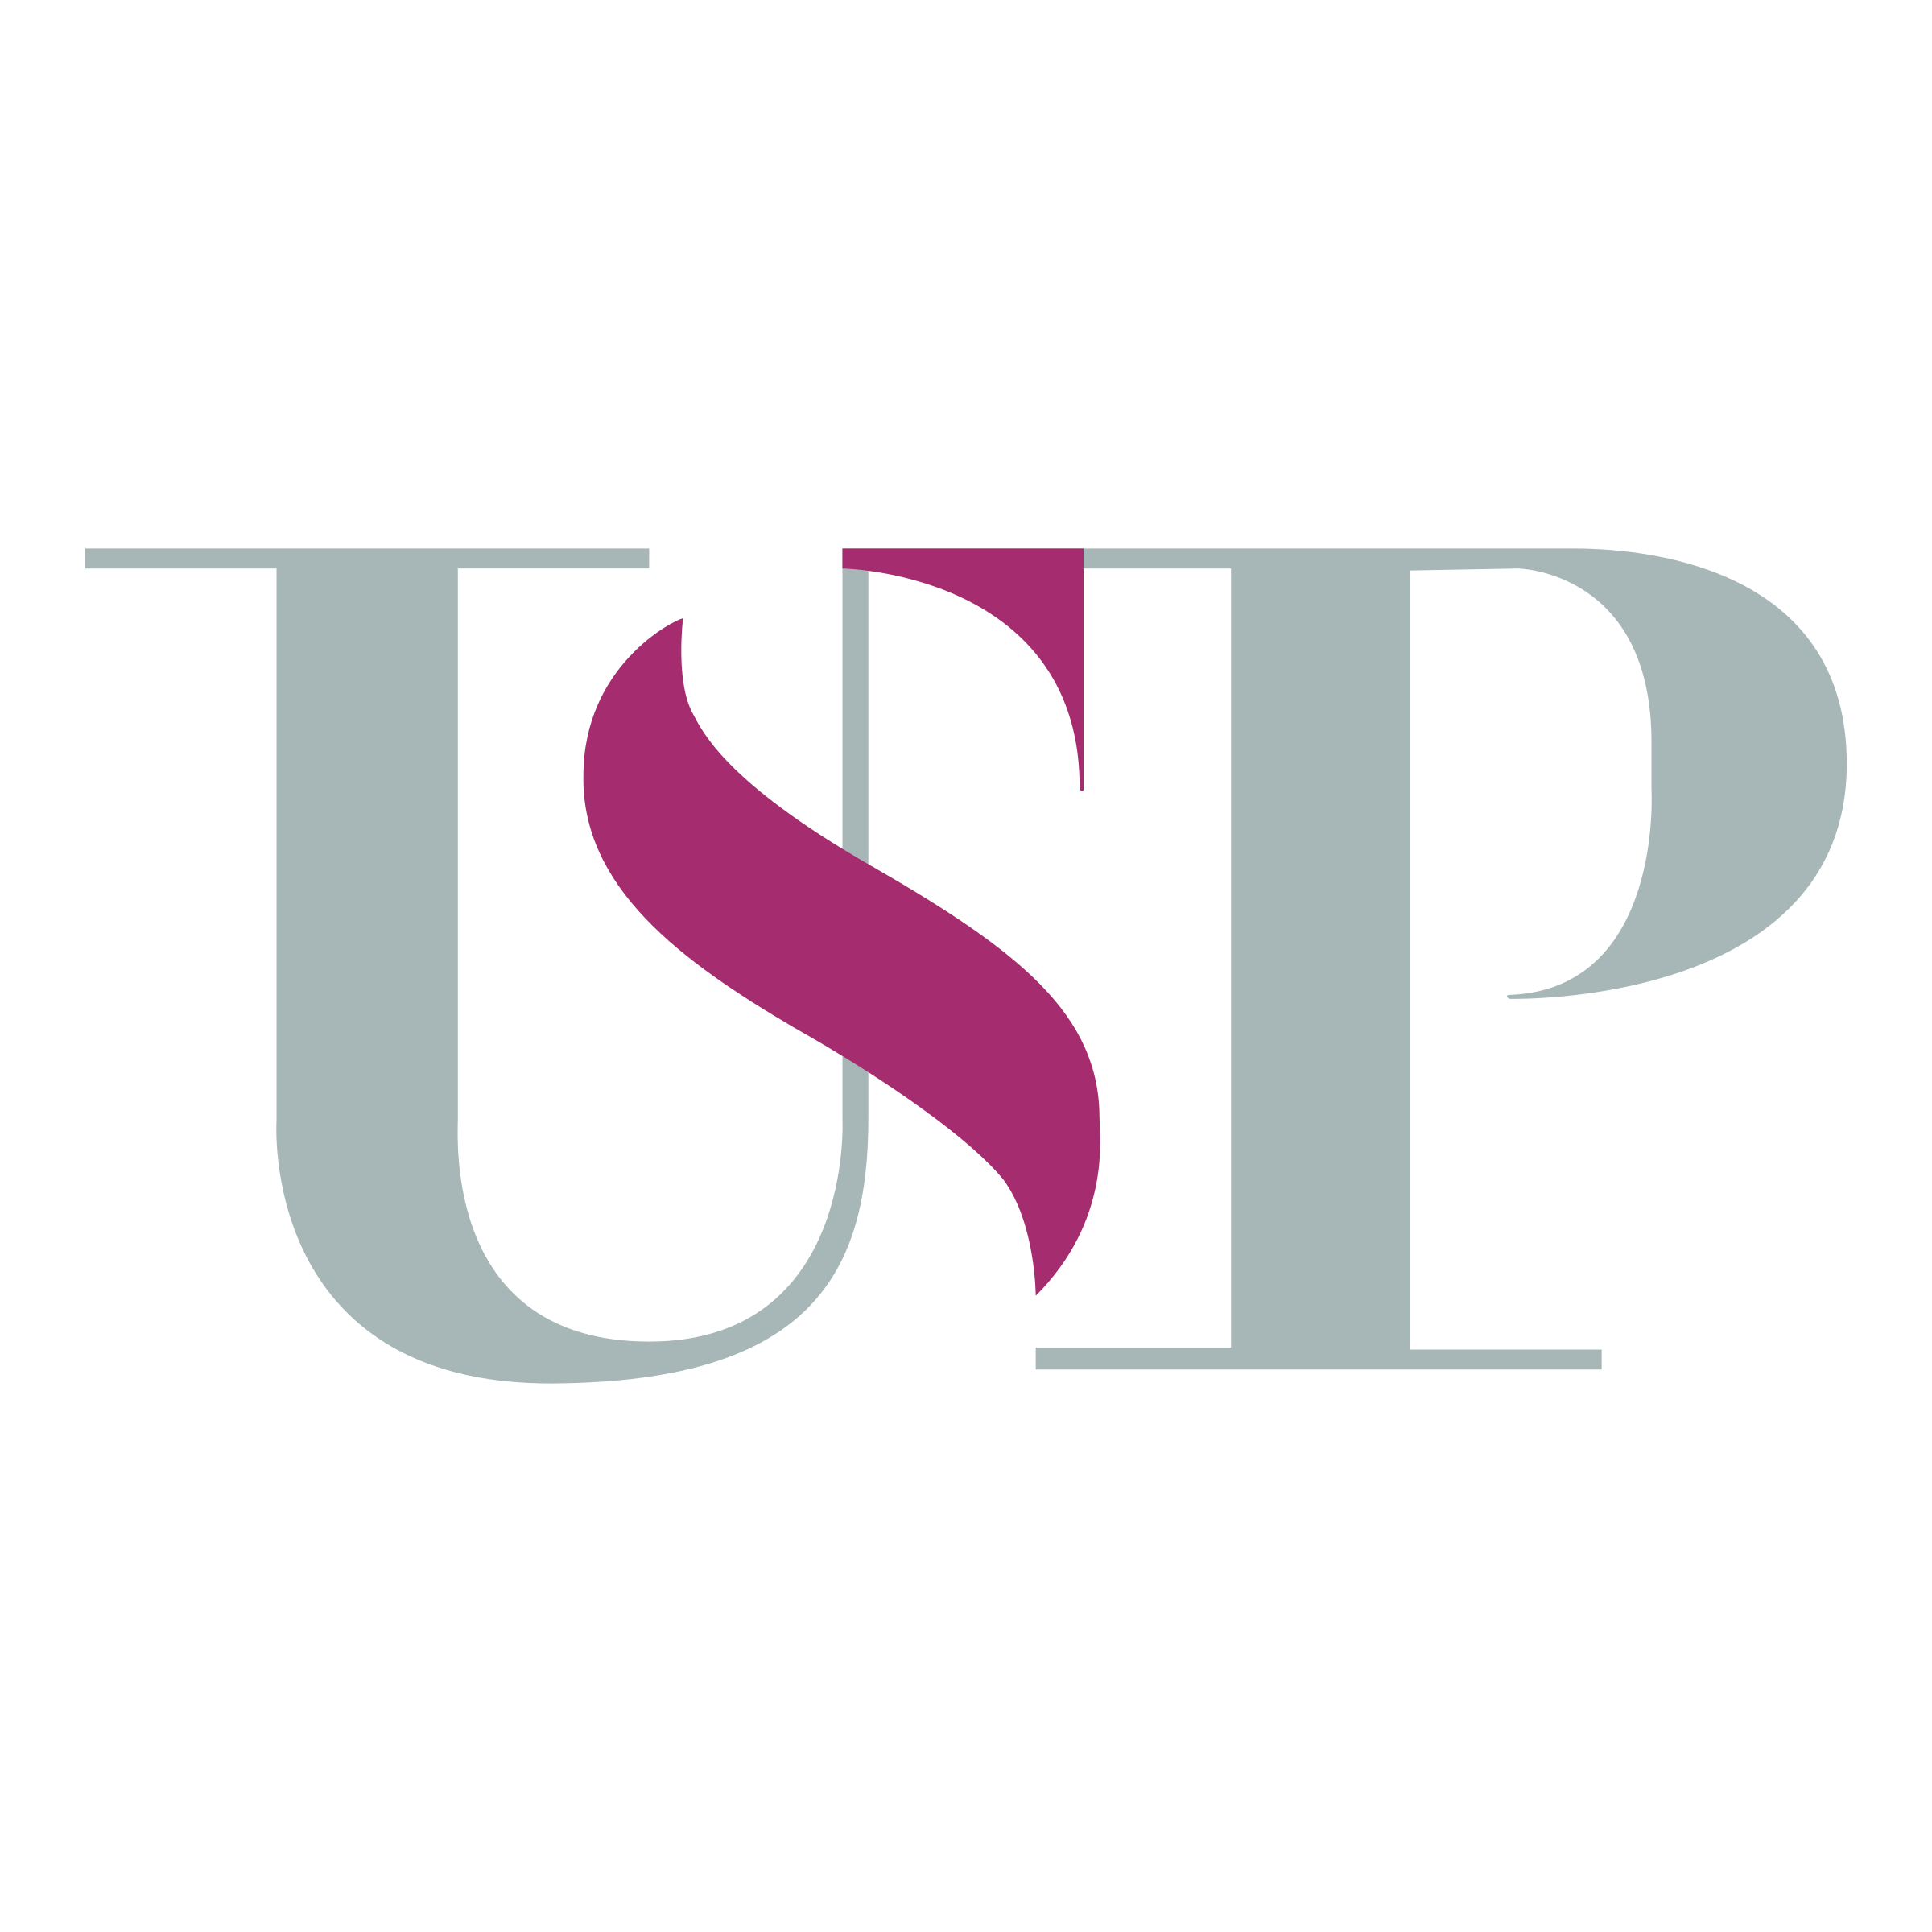 USP Logo - USP Logo PNG Transparent & SVG Vector - Freebie Supply